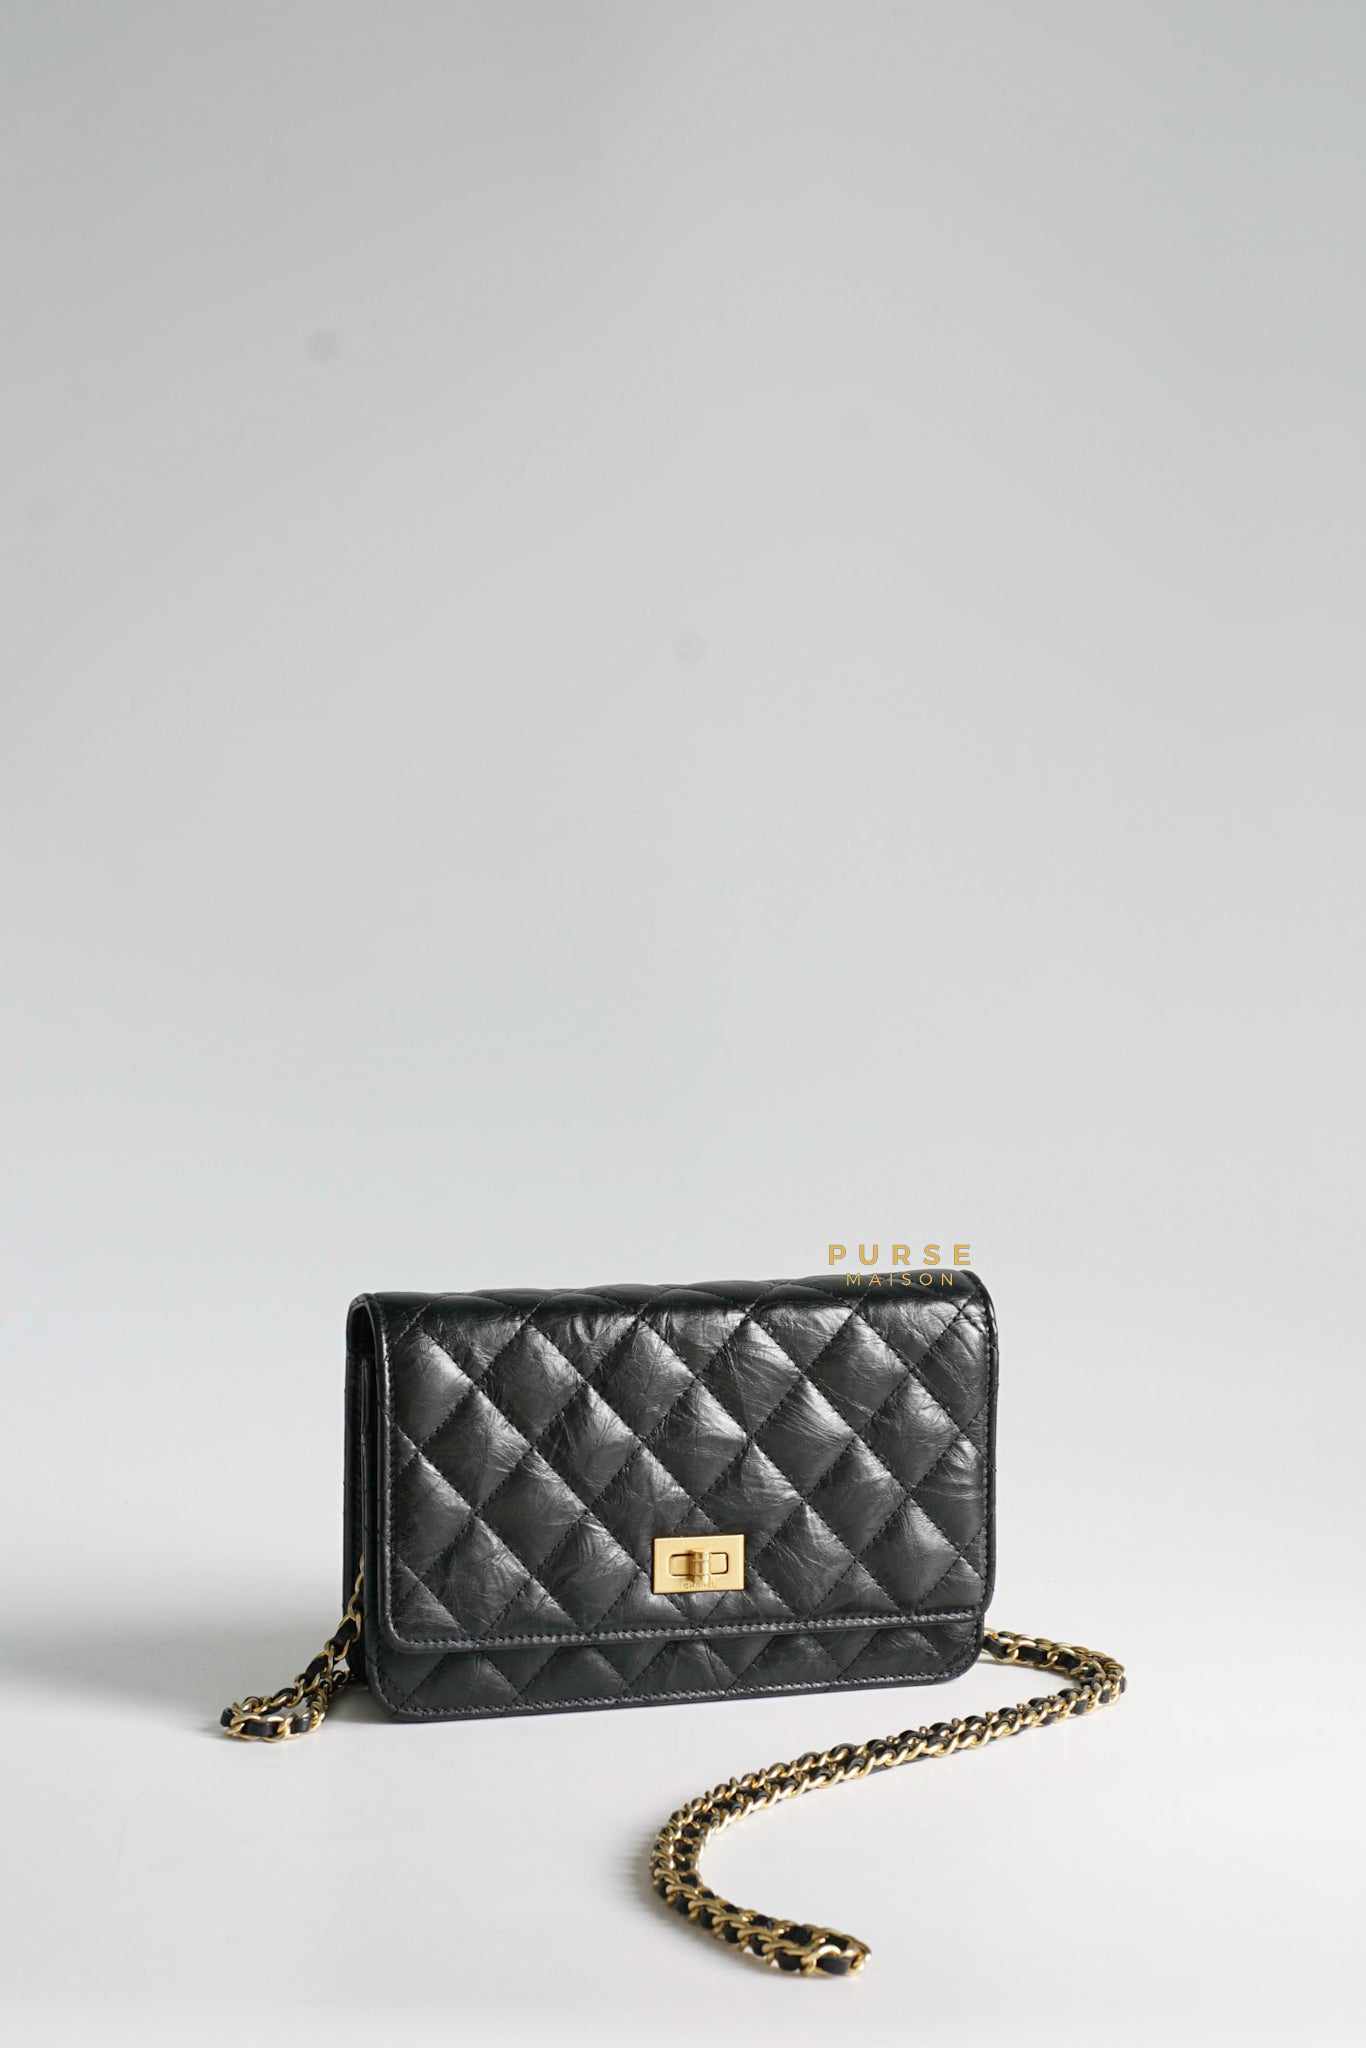 Chanel Reissue 2.55 So Black Small Wallets, Bragmybag